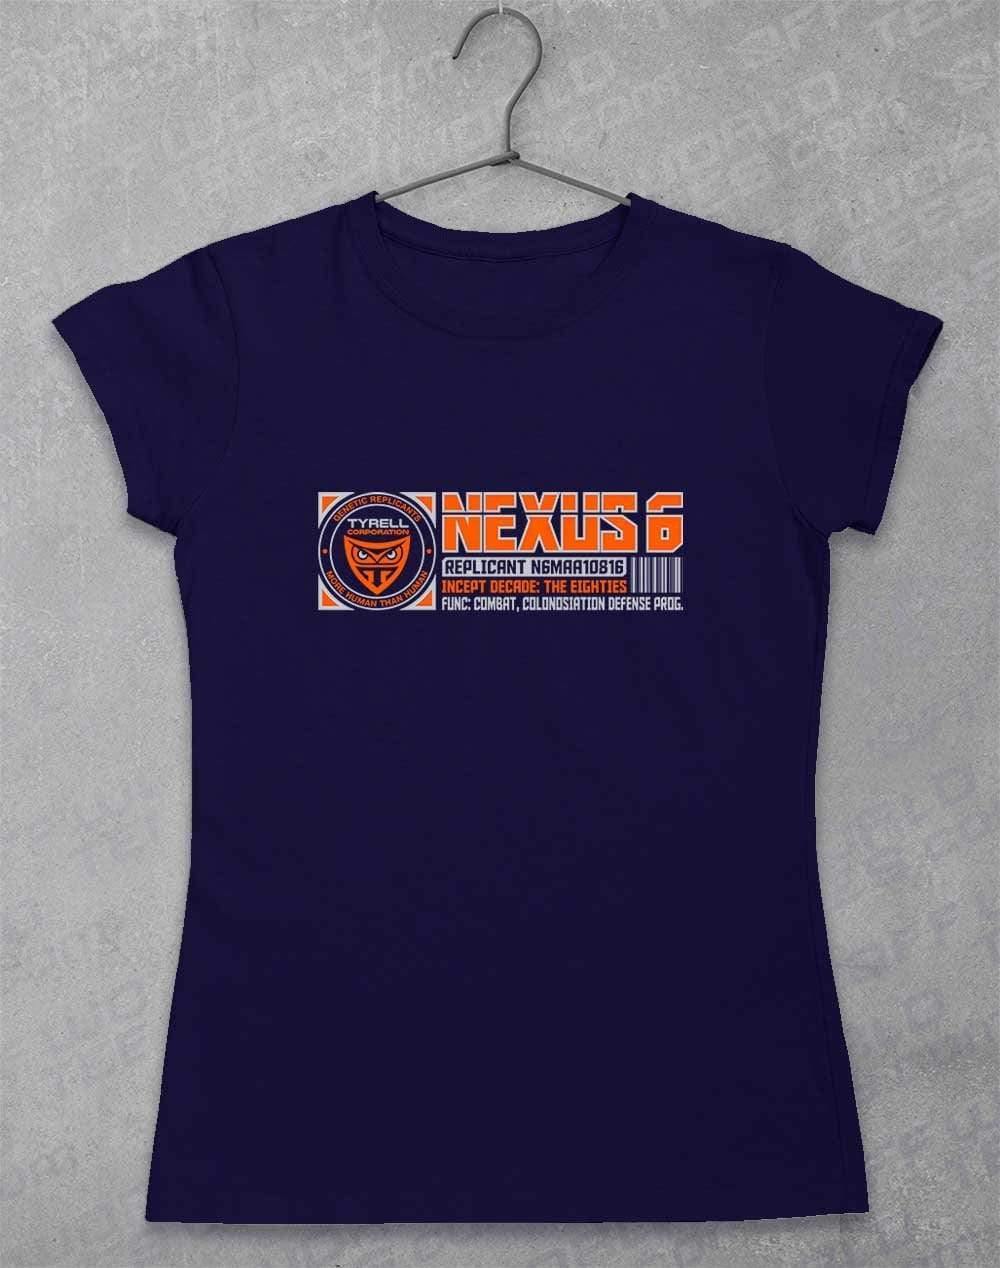 Nexus 6 Replicant Incept Date (CHOOSE YOUR DECADE!) Women's T-Shirt The Eighties - Navy / 8-10  - Off World Tees